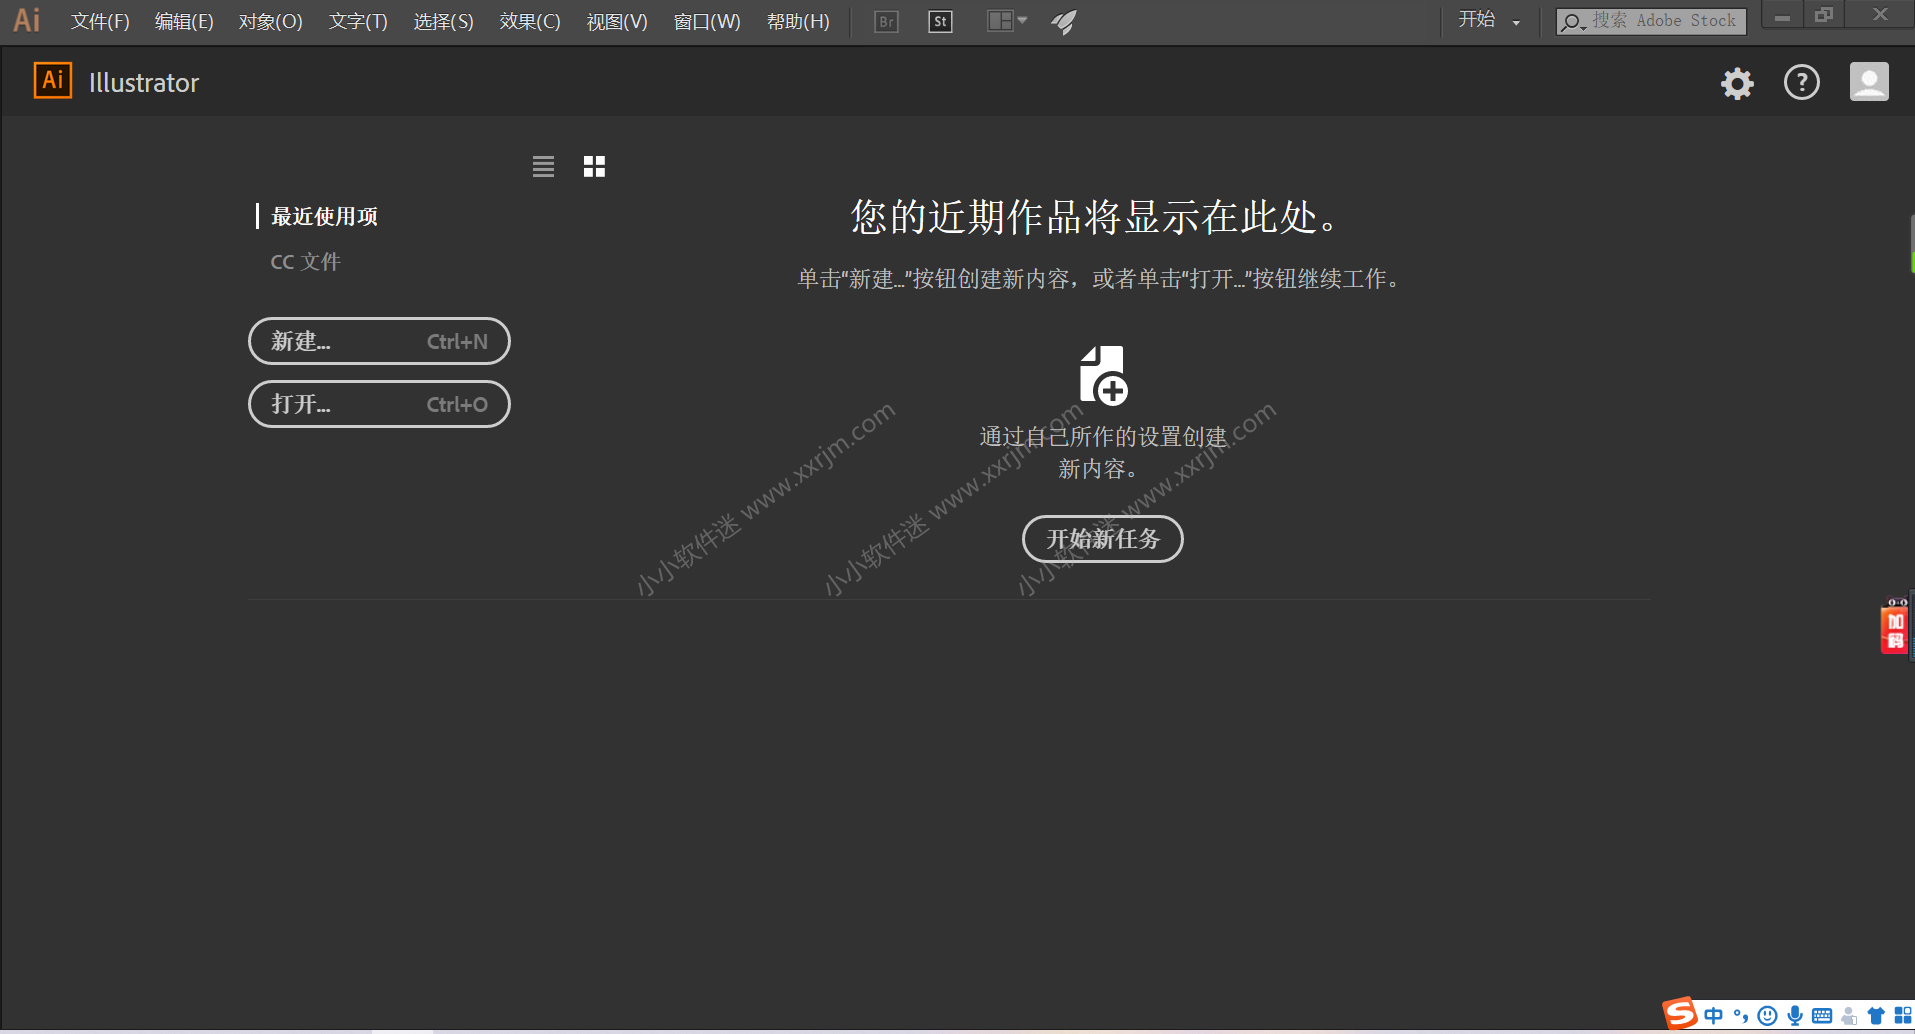 Adobe Illustrator CC2015绿色简体中文版下载地址和安装教程